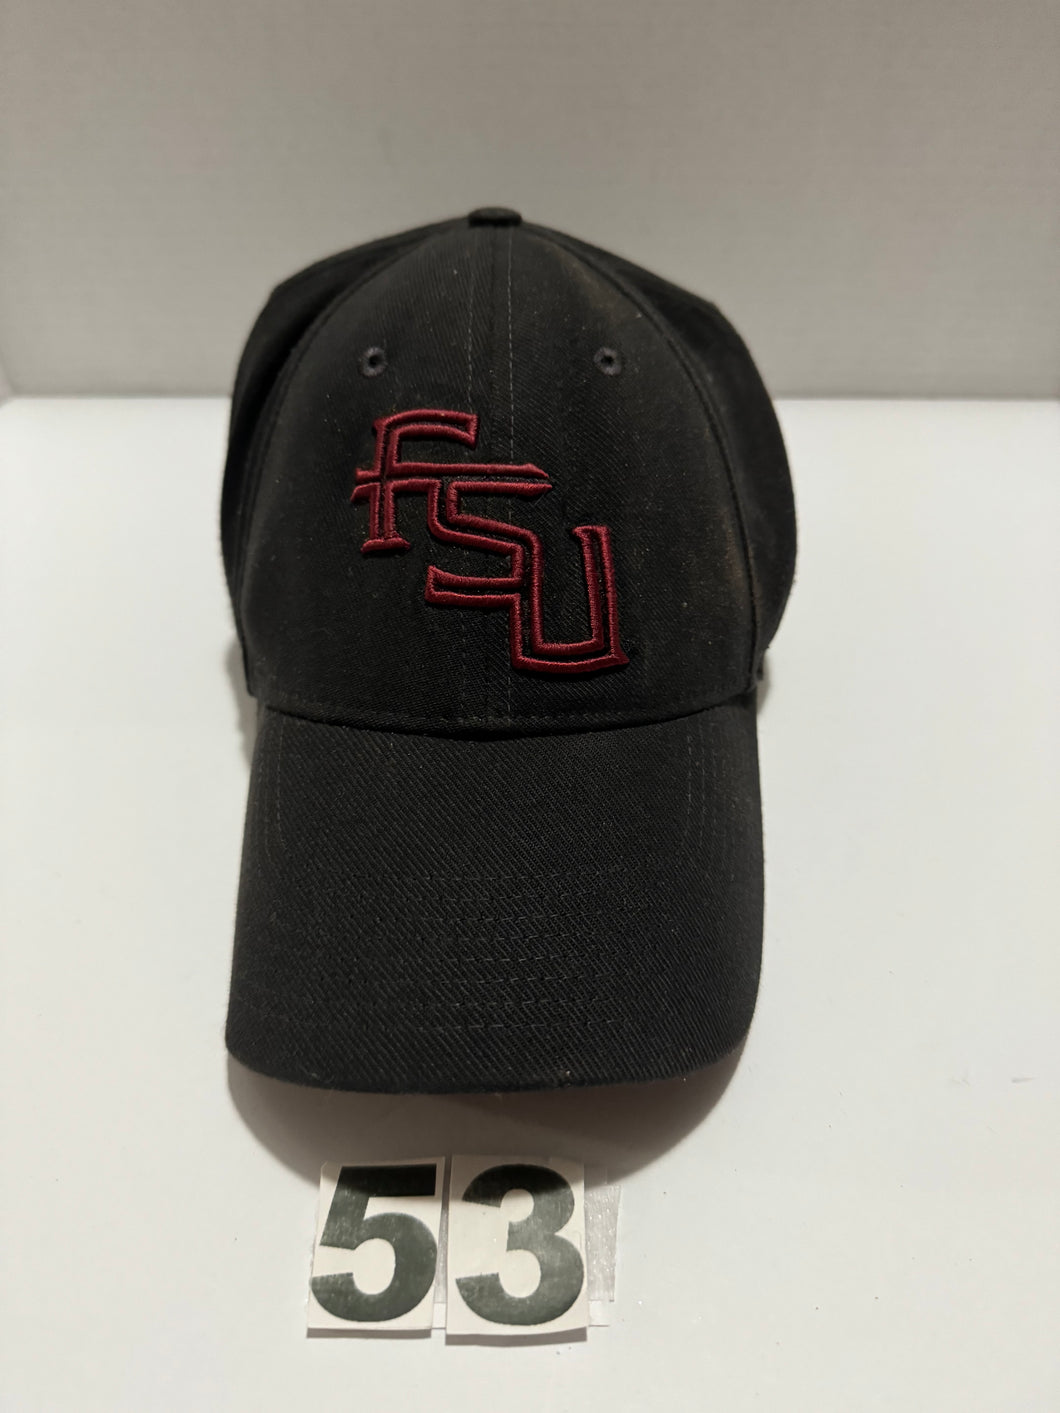 FSU Hat